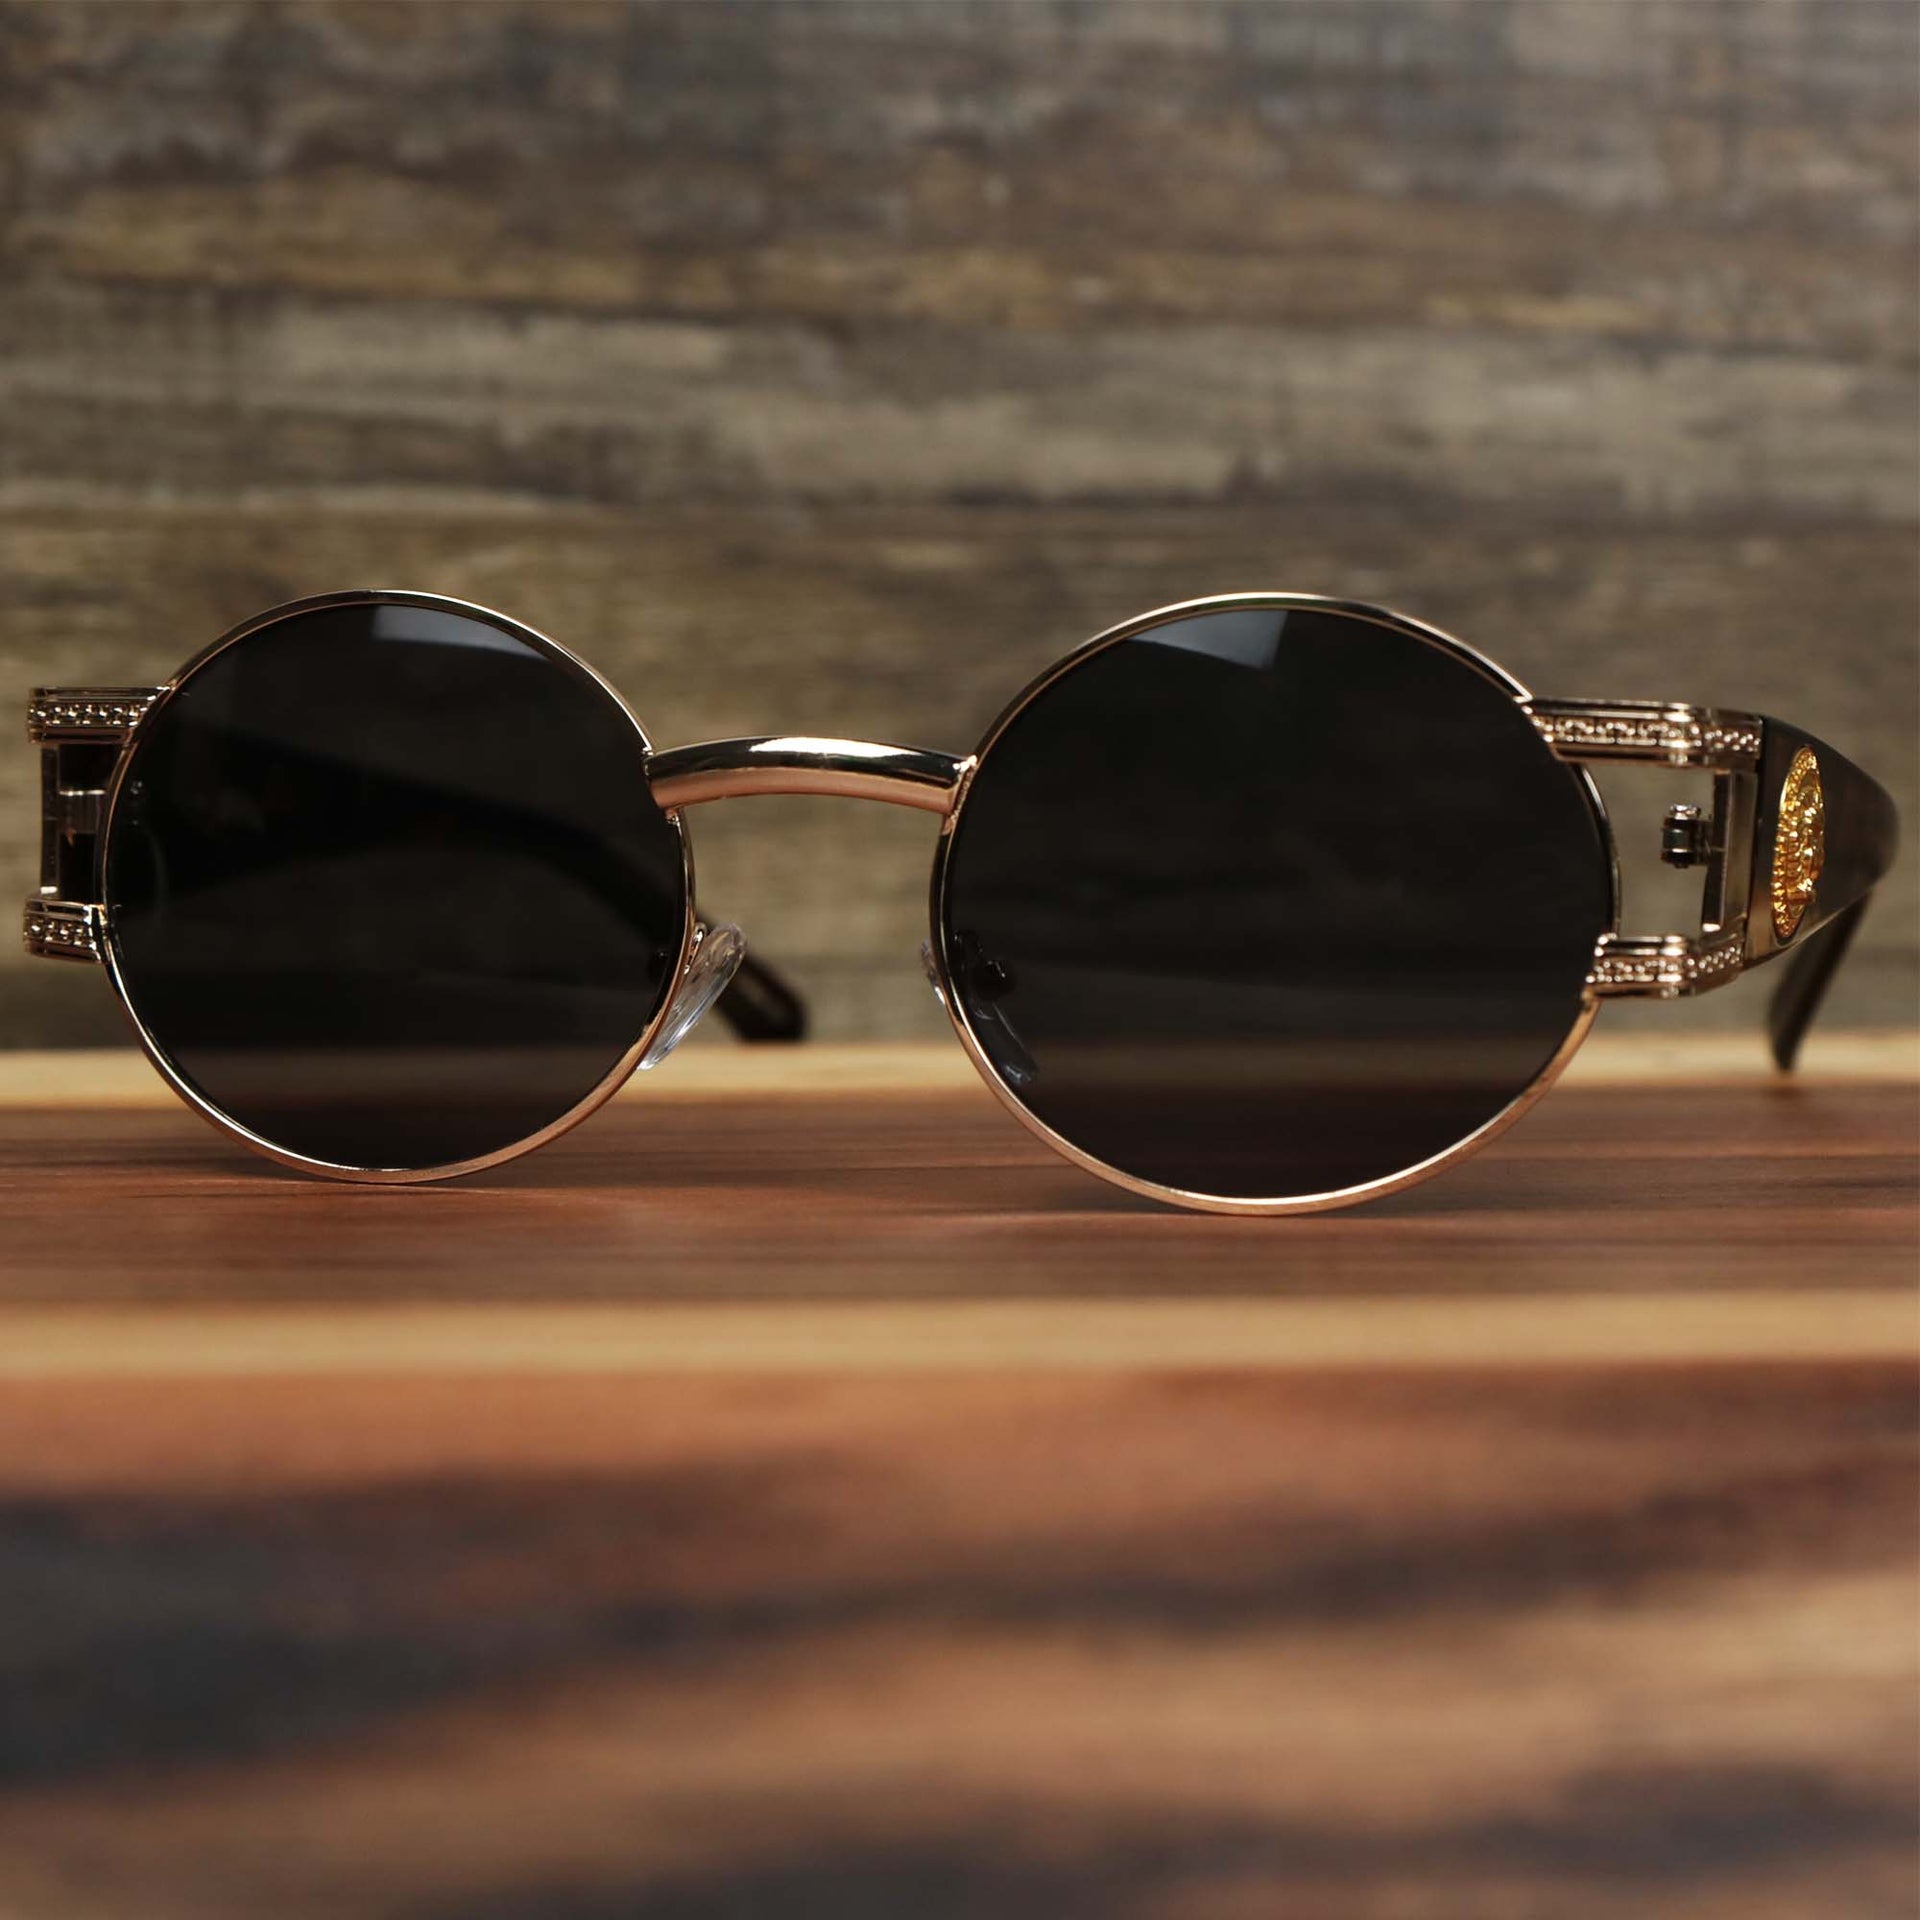 The Circle Frame Lion Head Emblem Black Lens Sunglasses with Rose Gold Frame